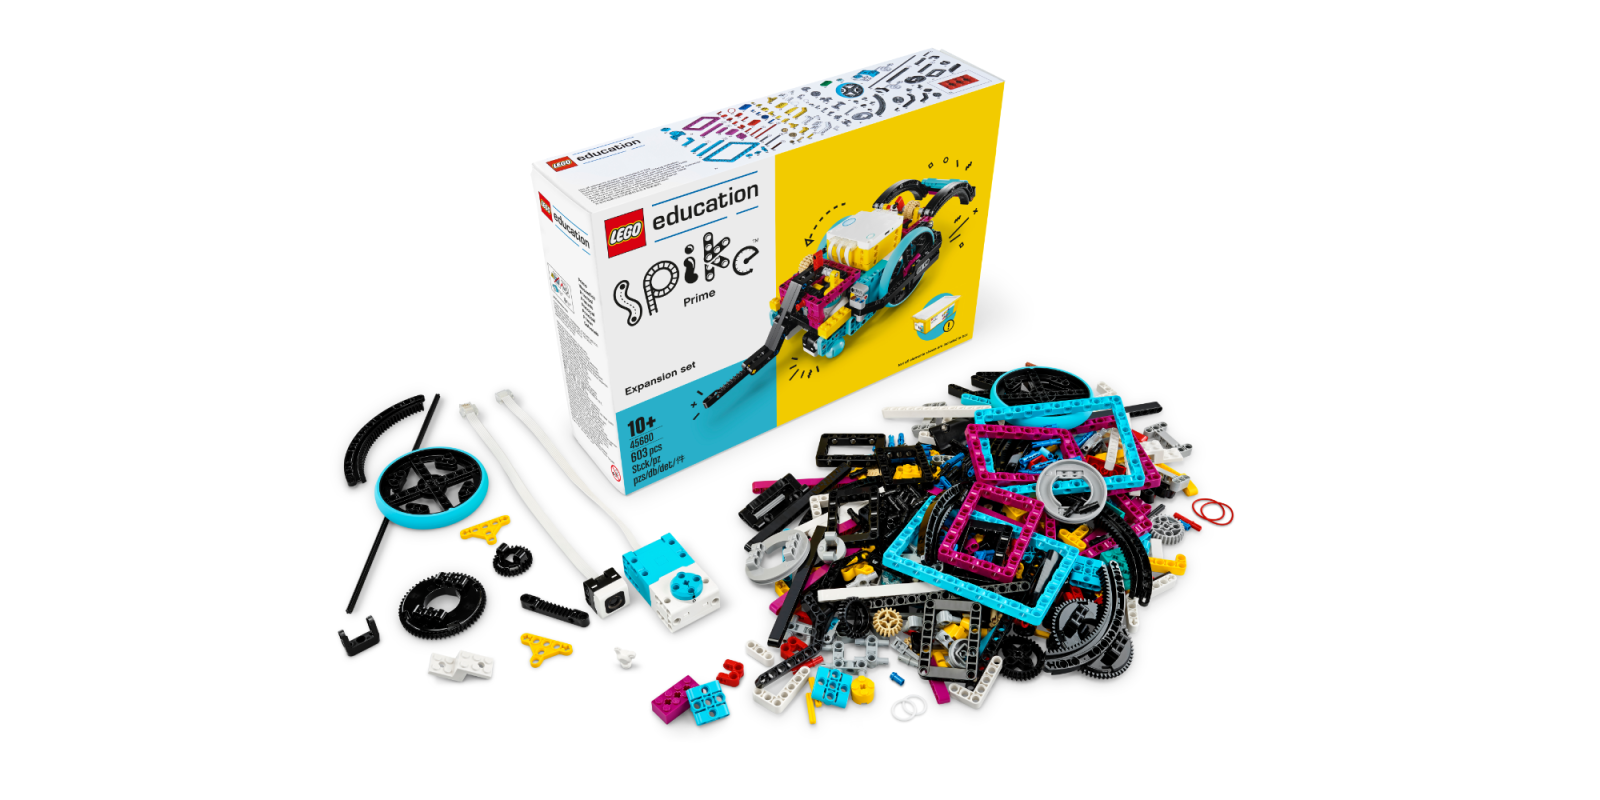 Making the Grade: LEGO Education SPIKE Prime kit provides hours of